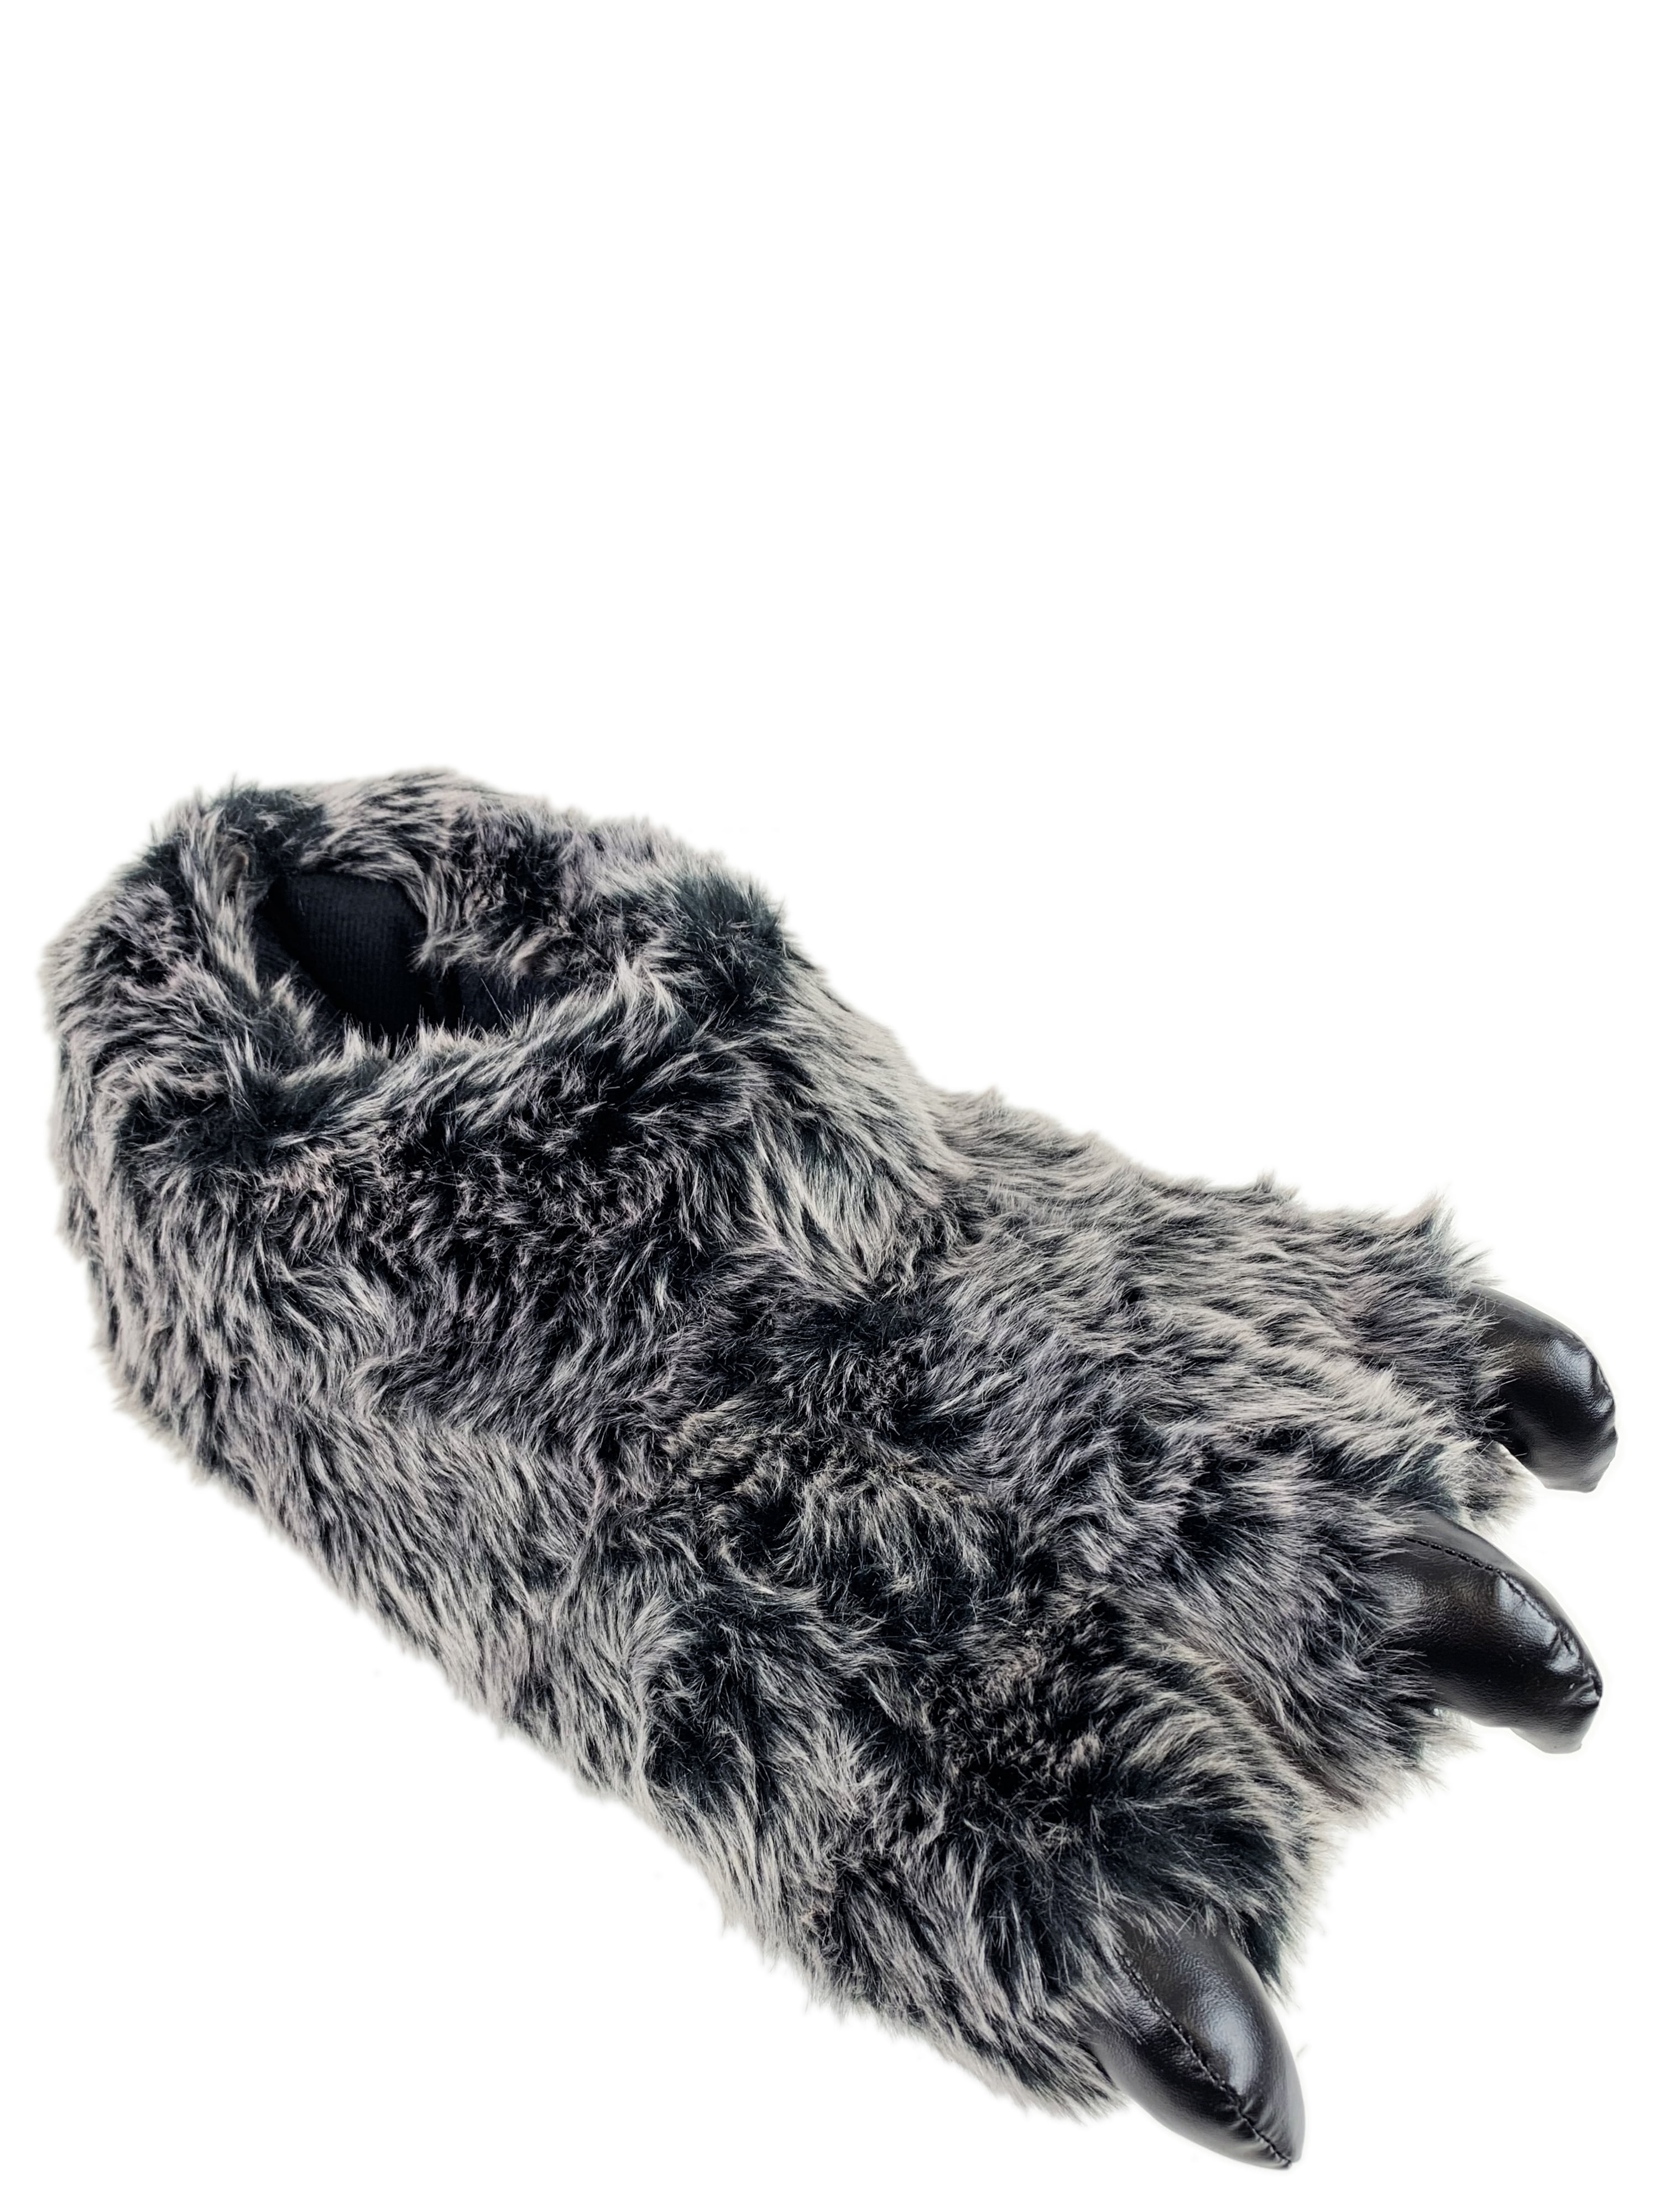 polar bear slippers walmart